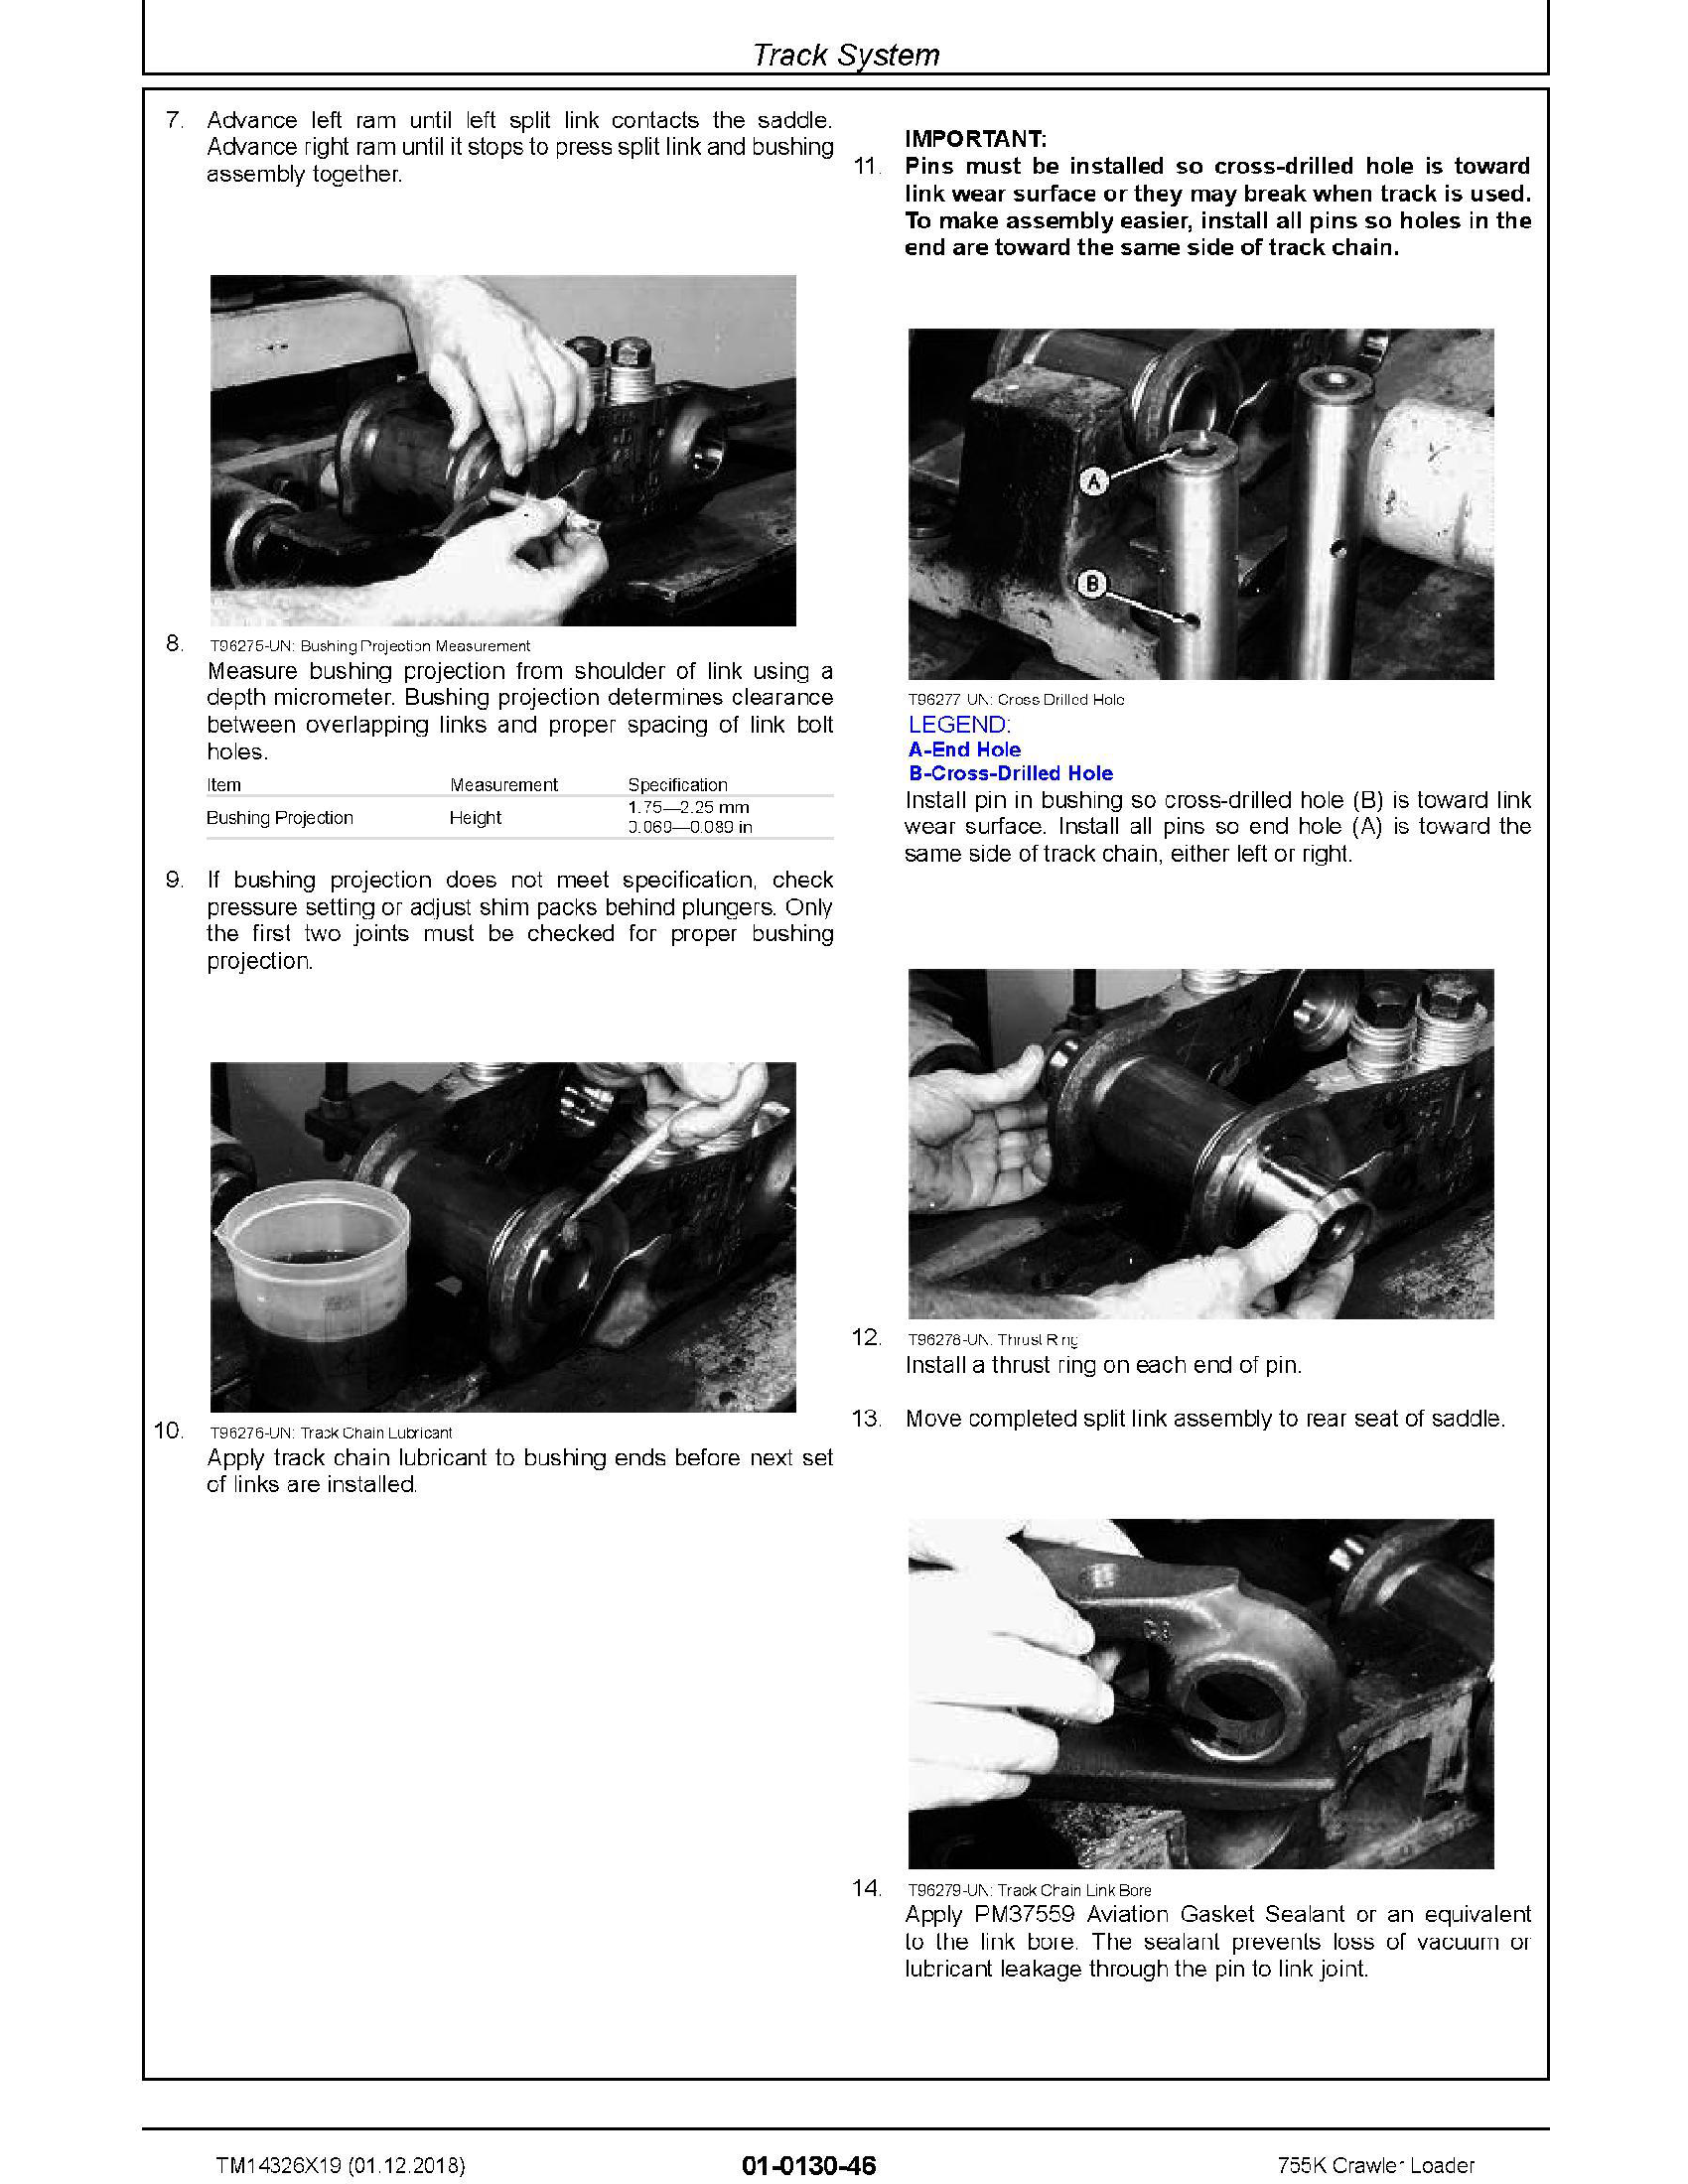 John Deere _F339207������� manual pdf